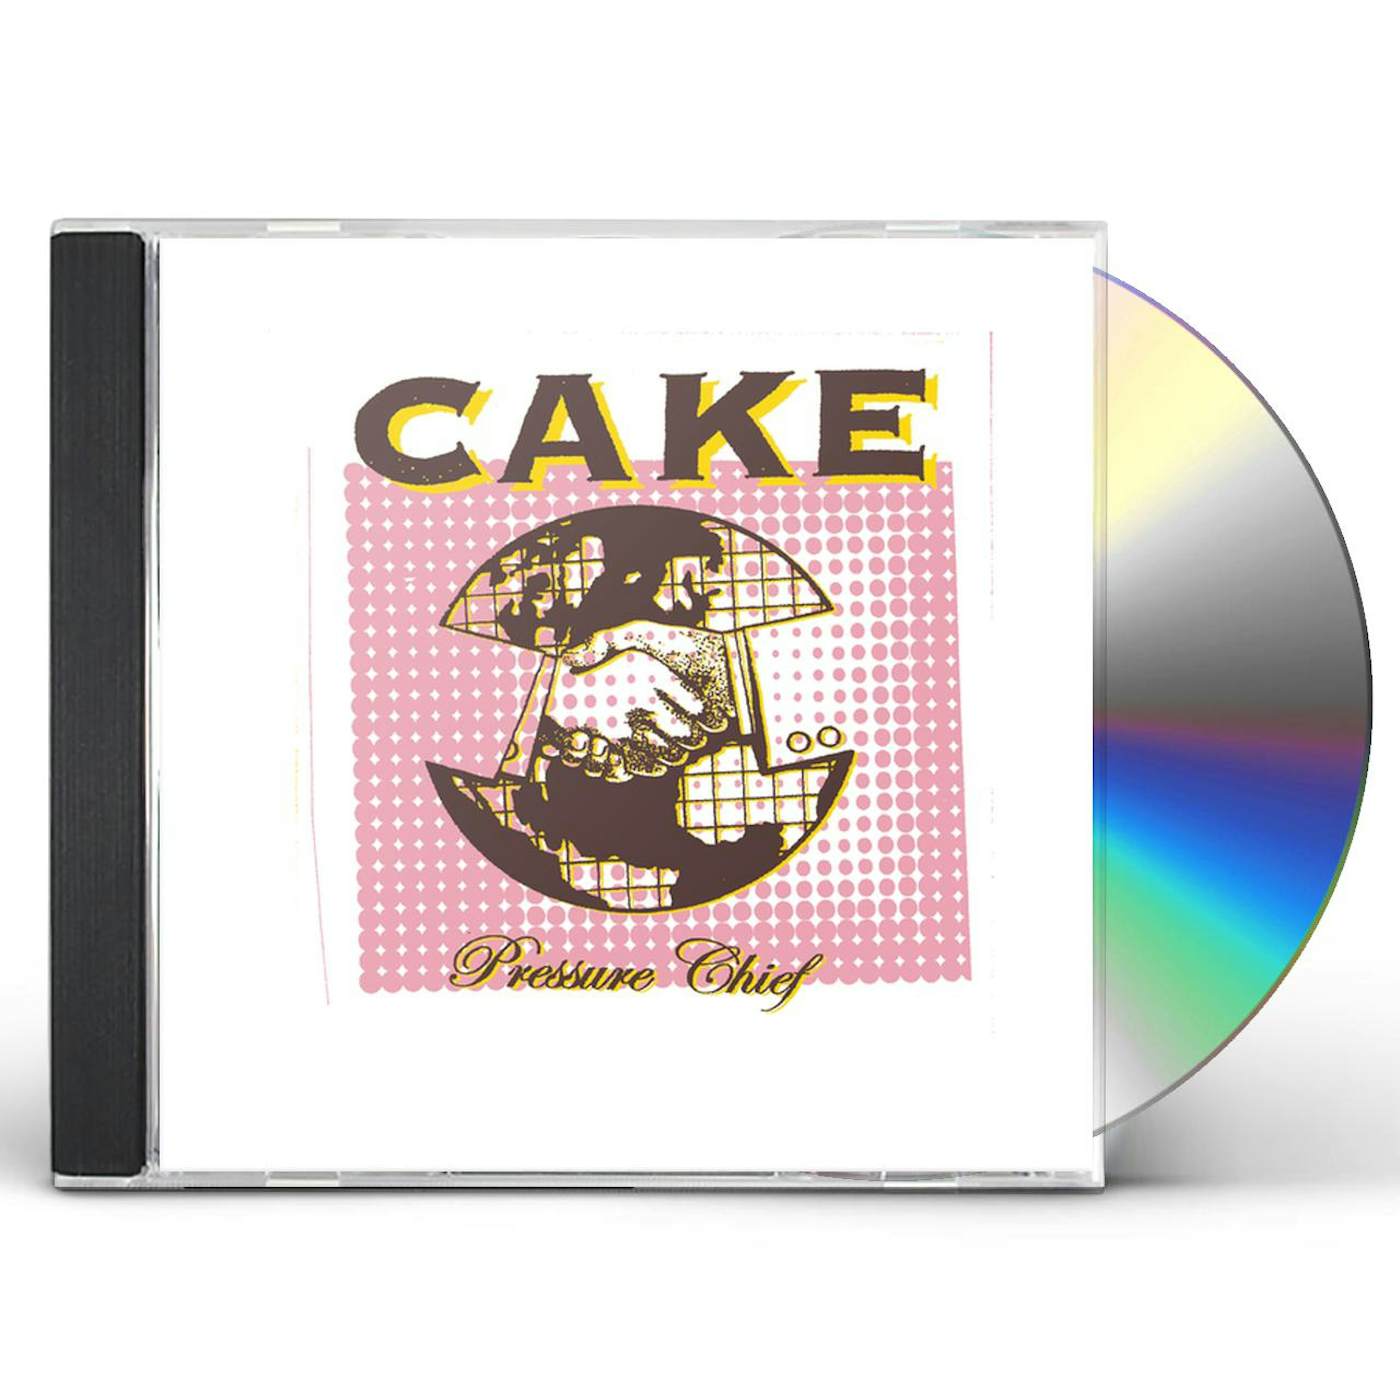 CAKE PRESSURE CHIEF CD